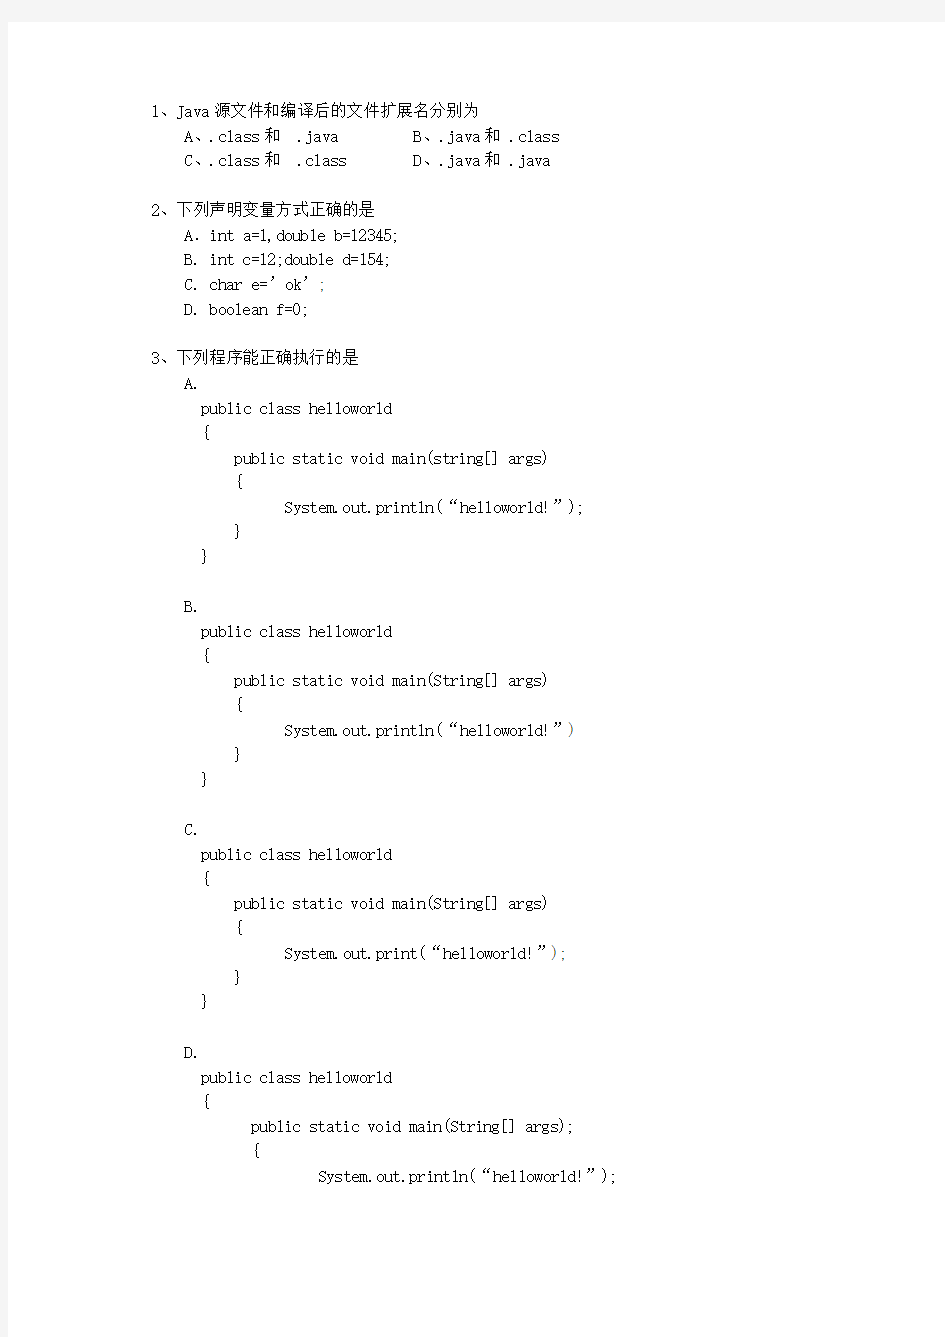 Java基础语法测试题(2)